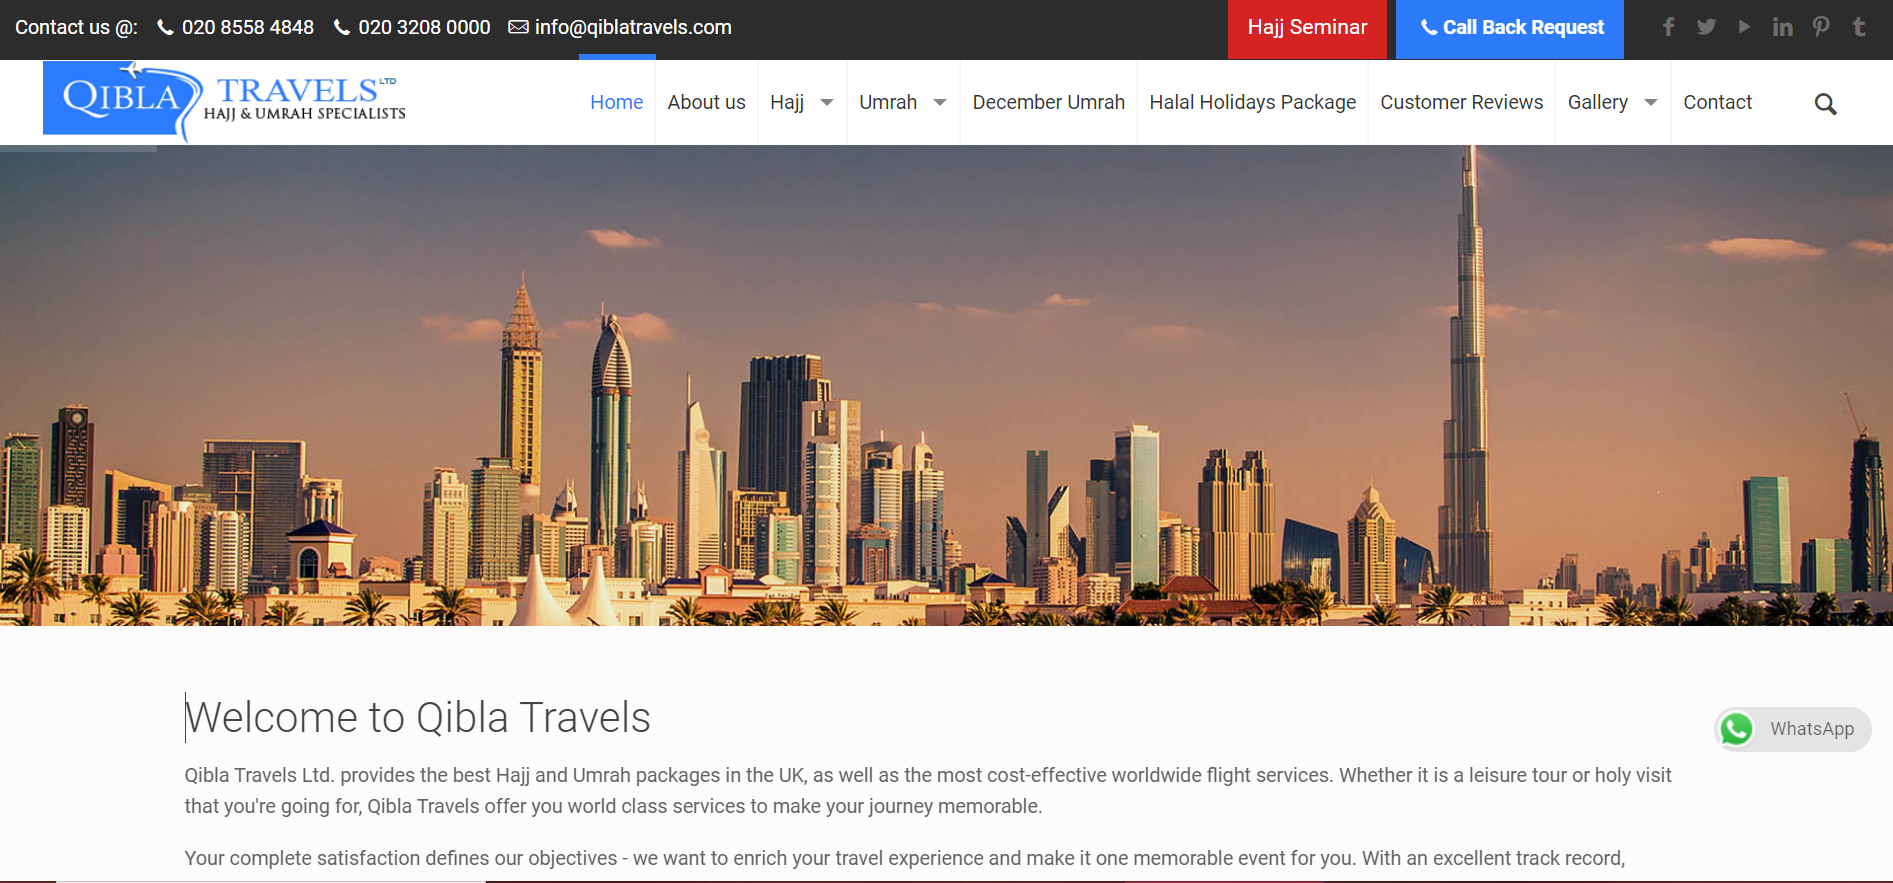 UK Travel Agents - Flights and Holiday Deals | Qibla Travels